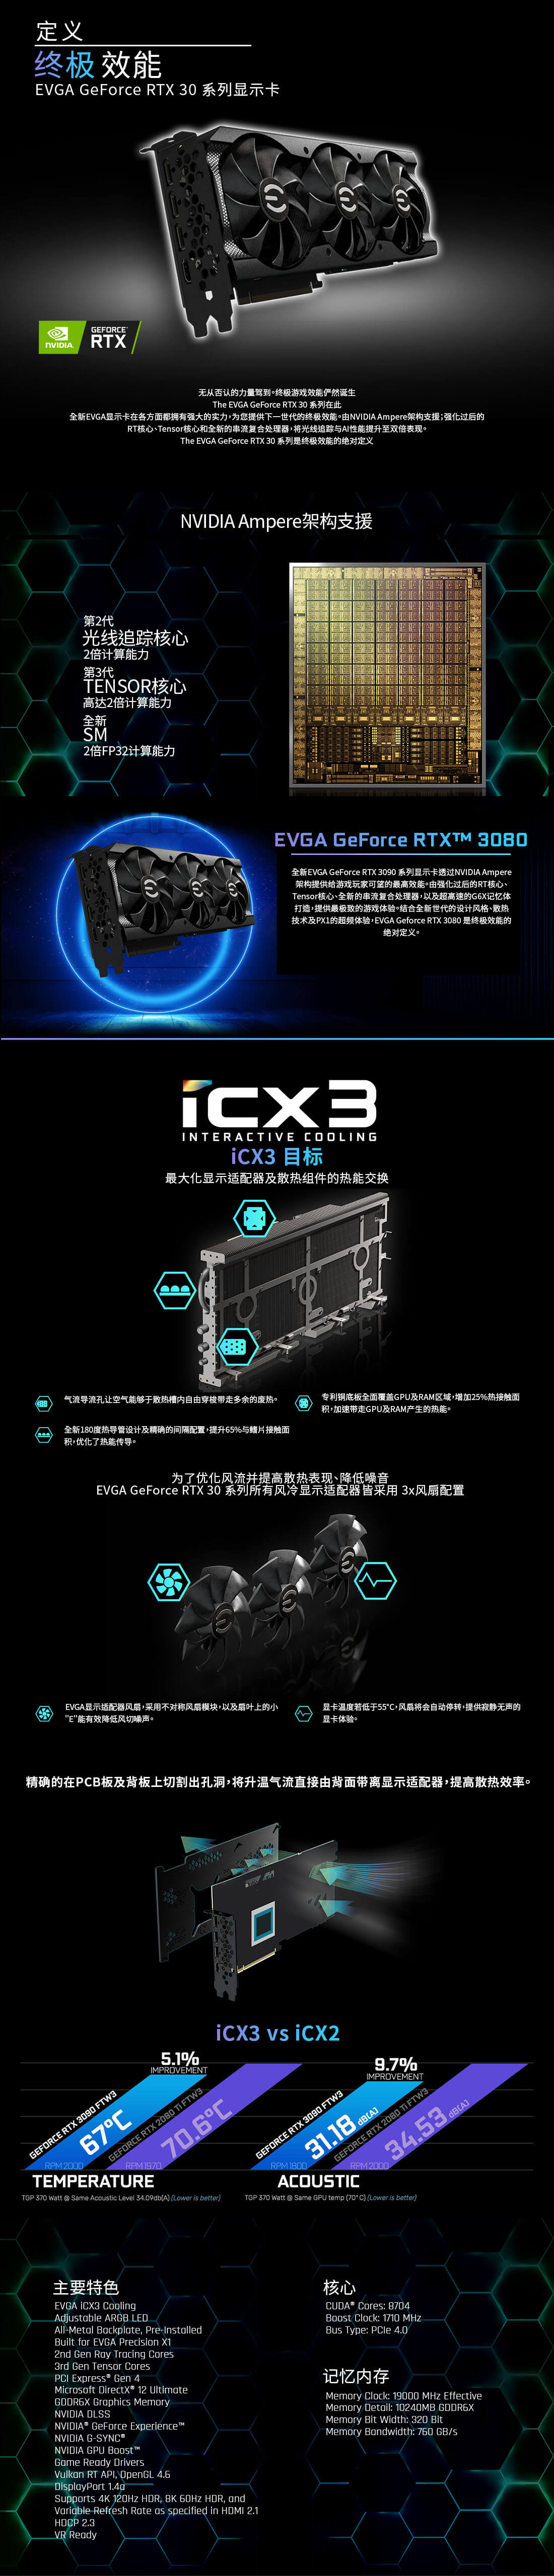 Evga Cn 产品 Evga Geforce Rtx 3080 Xc3 Gaming 10g P5 38 Kr 10gb Gddr6x Icx3 Cooling Argb Led Metal Backplate 10g P5 38 Kr